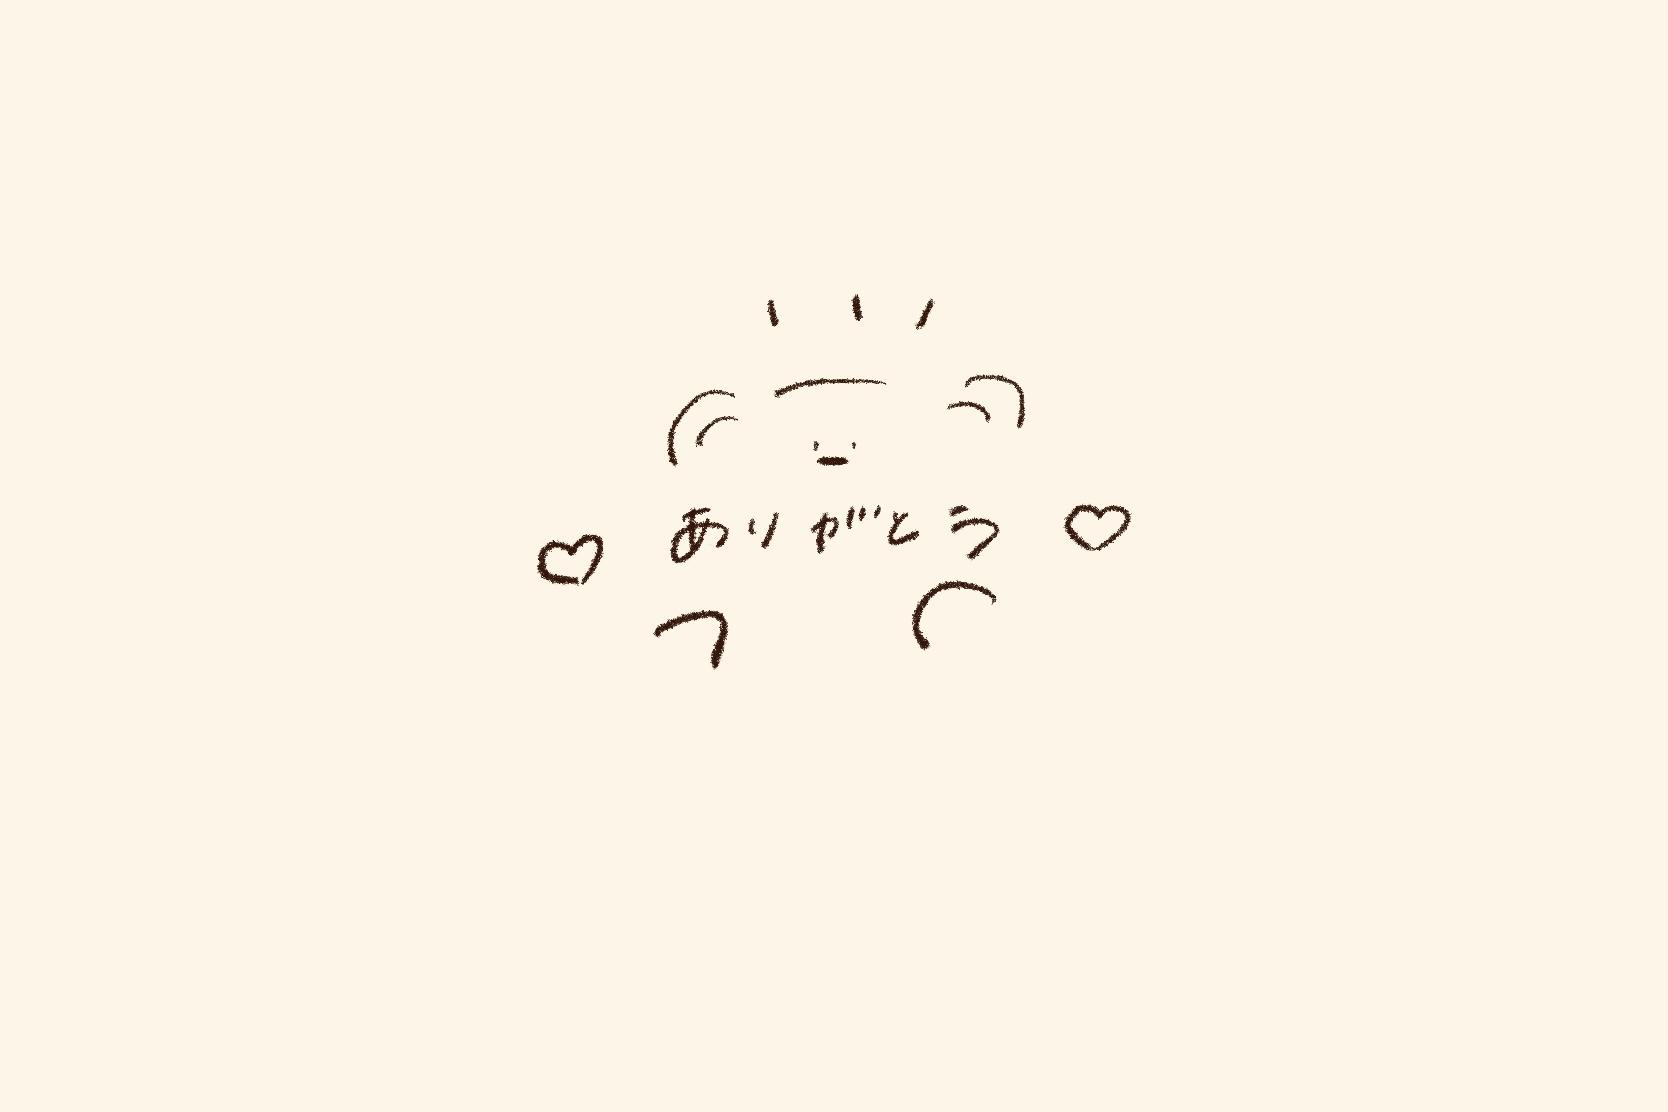 thankyou<img class="emojione" alt="🌼" title=":blossom:" src="https://fuzoku.jp/assets/img/emojione/1f33c.png"/>